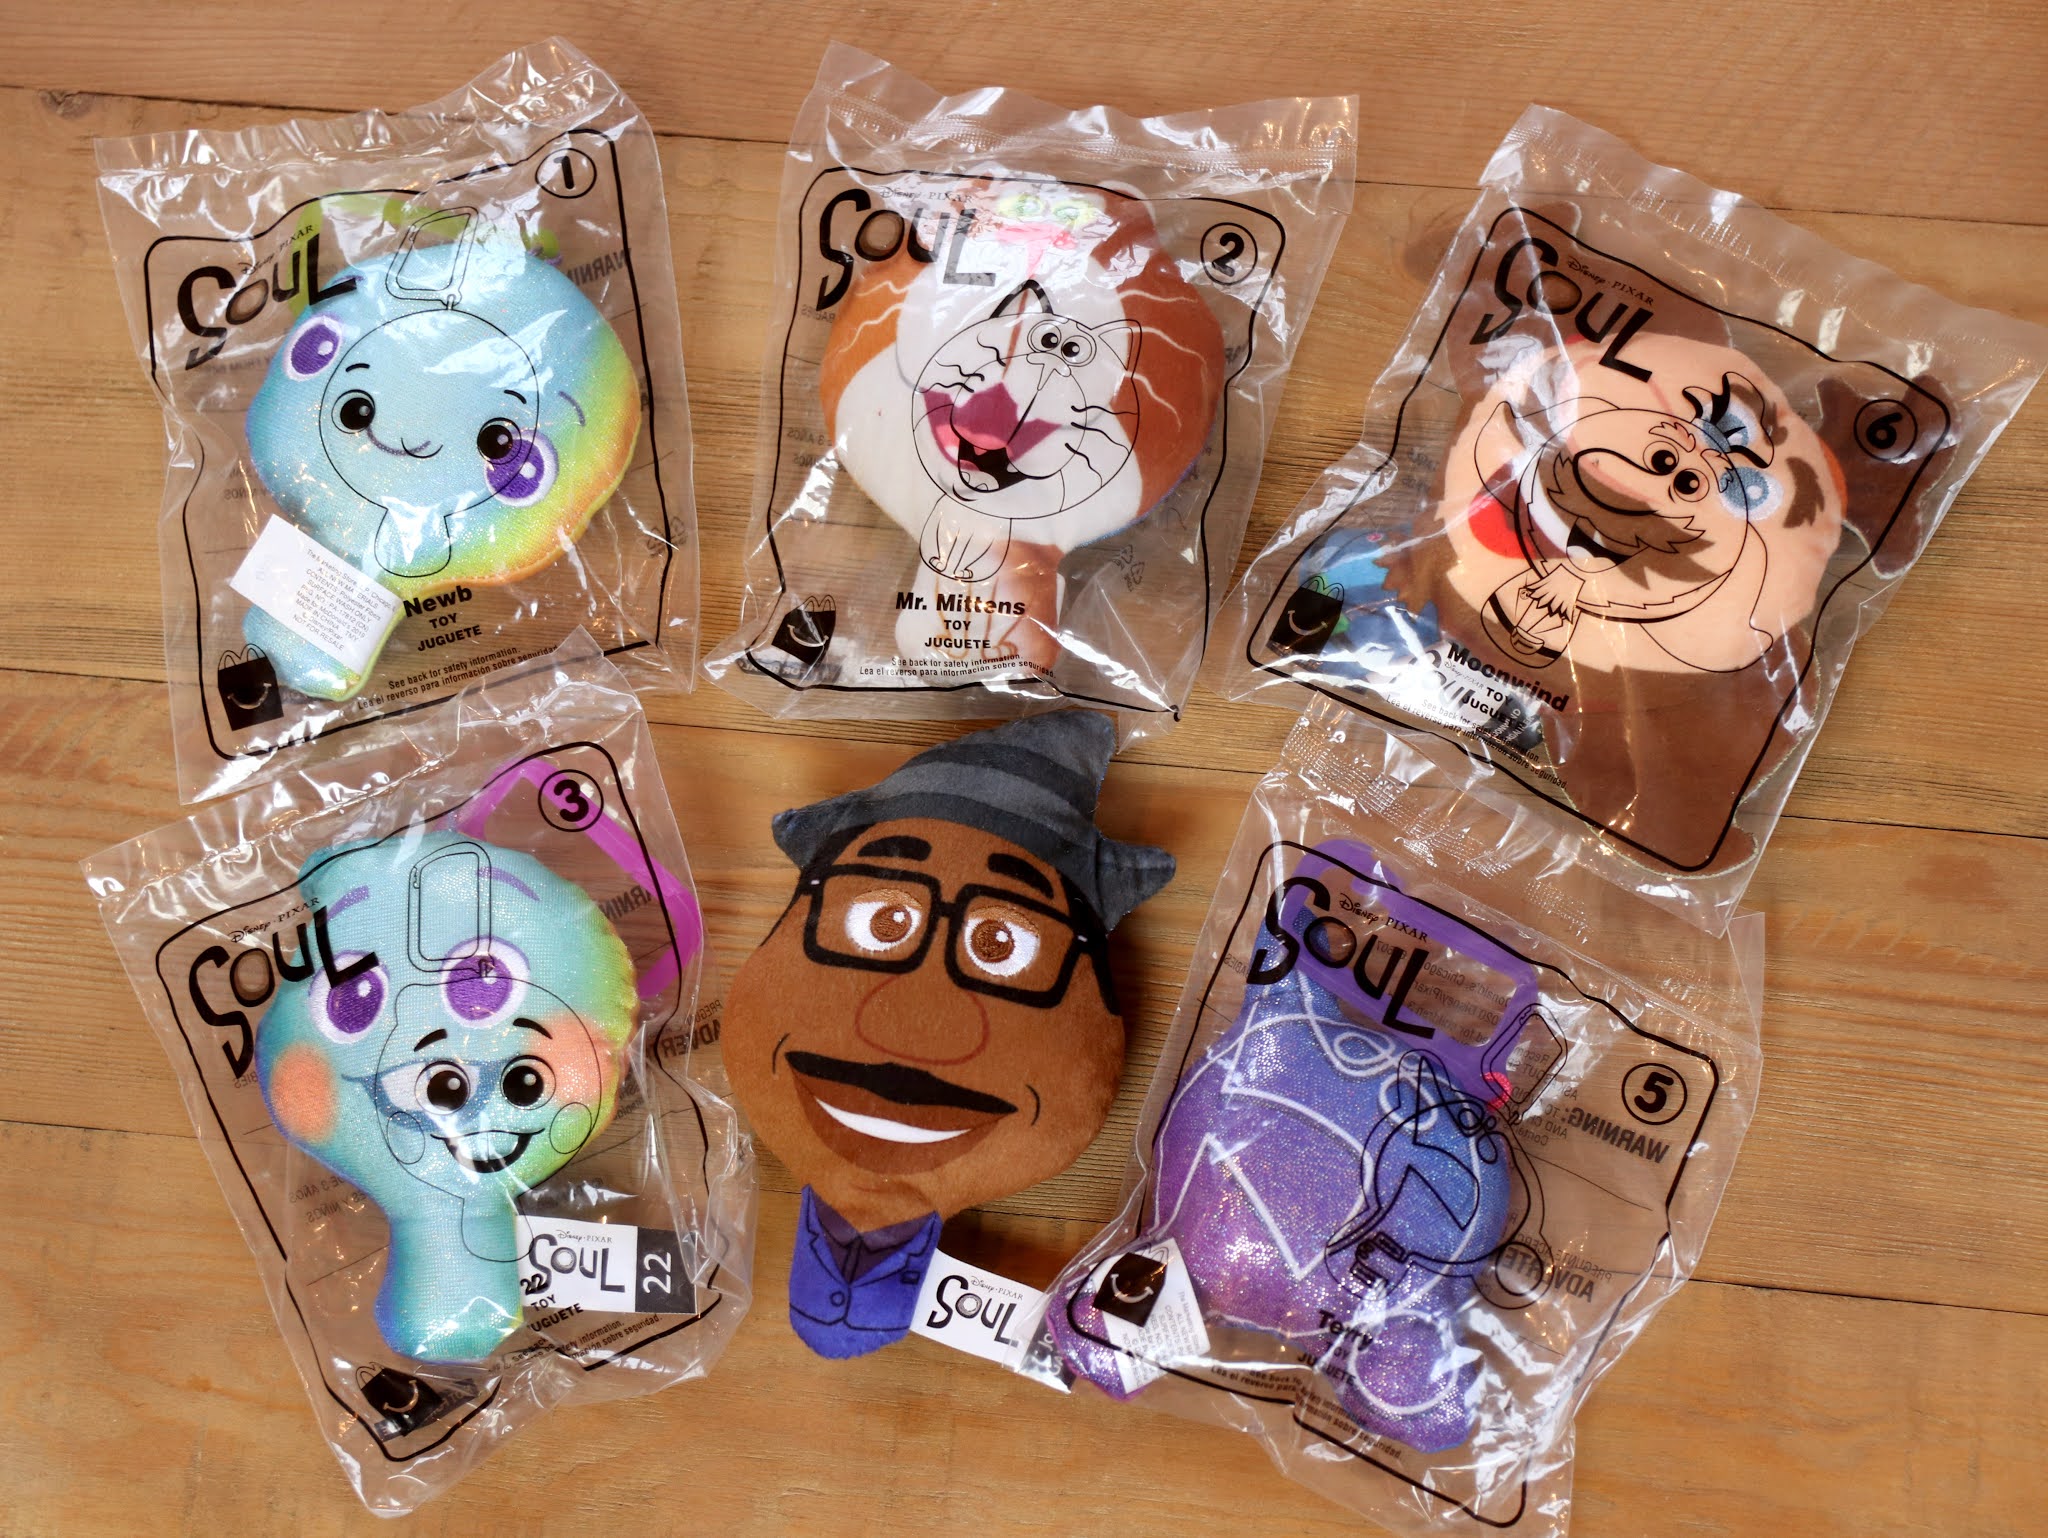 2020 McDONALD'S Disney Pixar Celebration 20th HAPPY MEAL TOYS Choose Toy or Set 